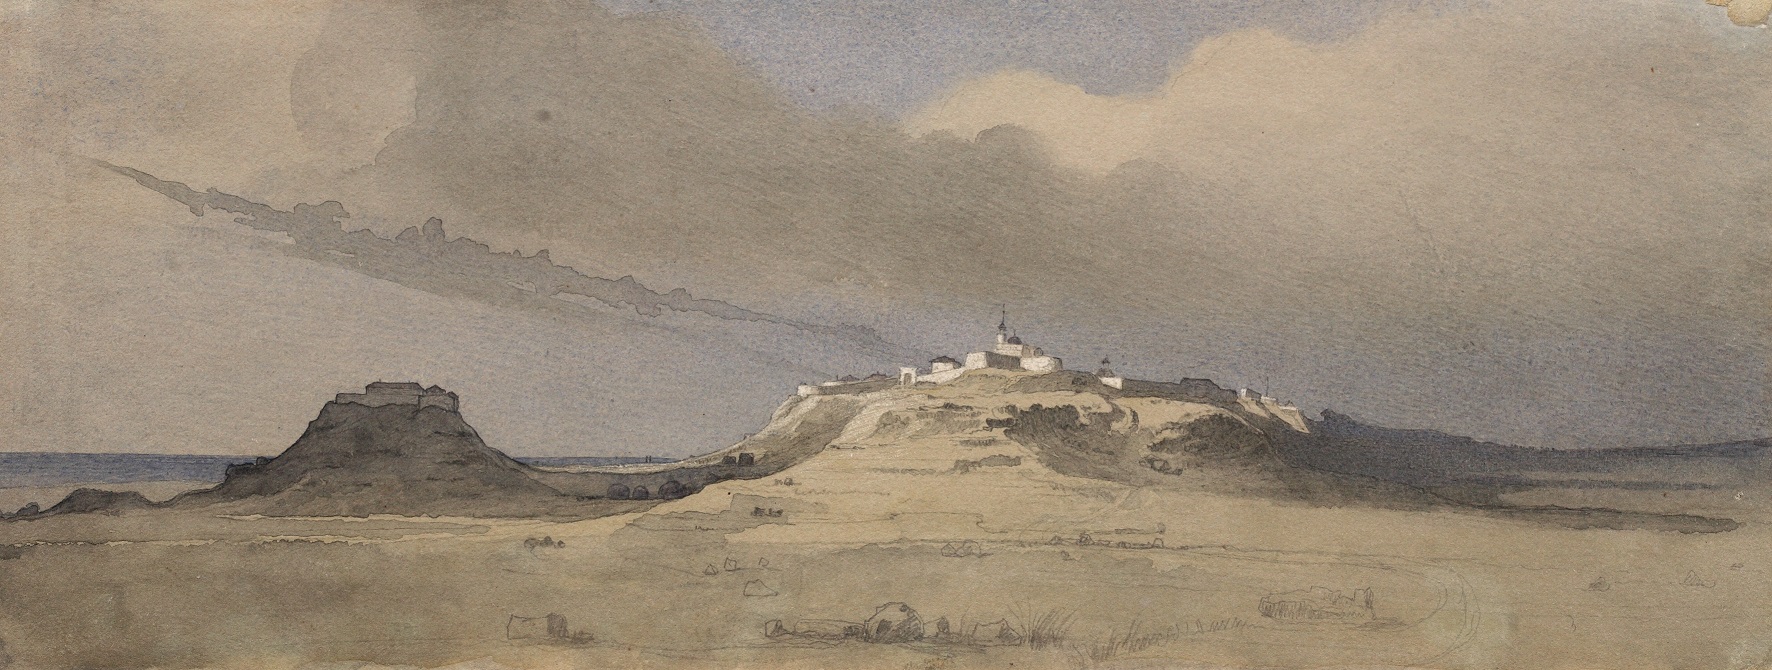 Fort Novopetrovsk from the Khiva Road, 1856-1857, watercolour